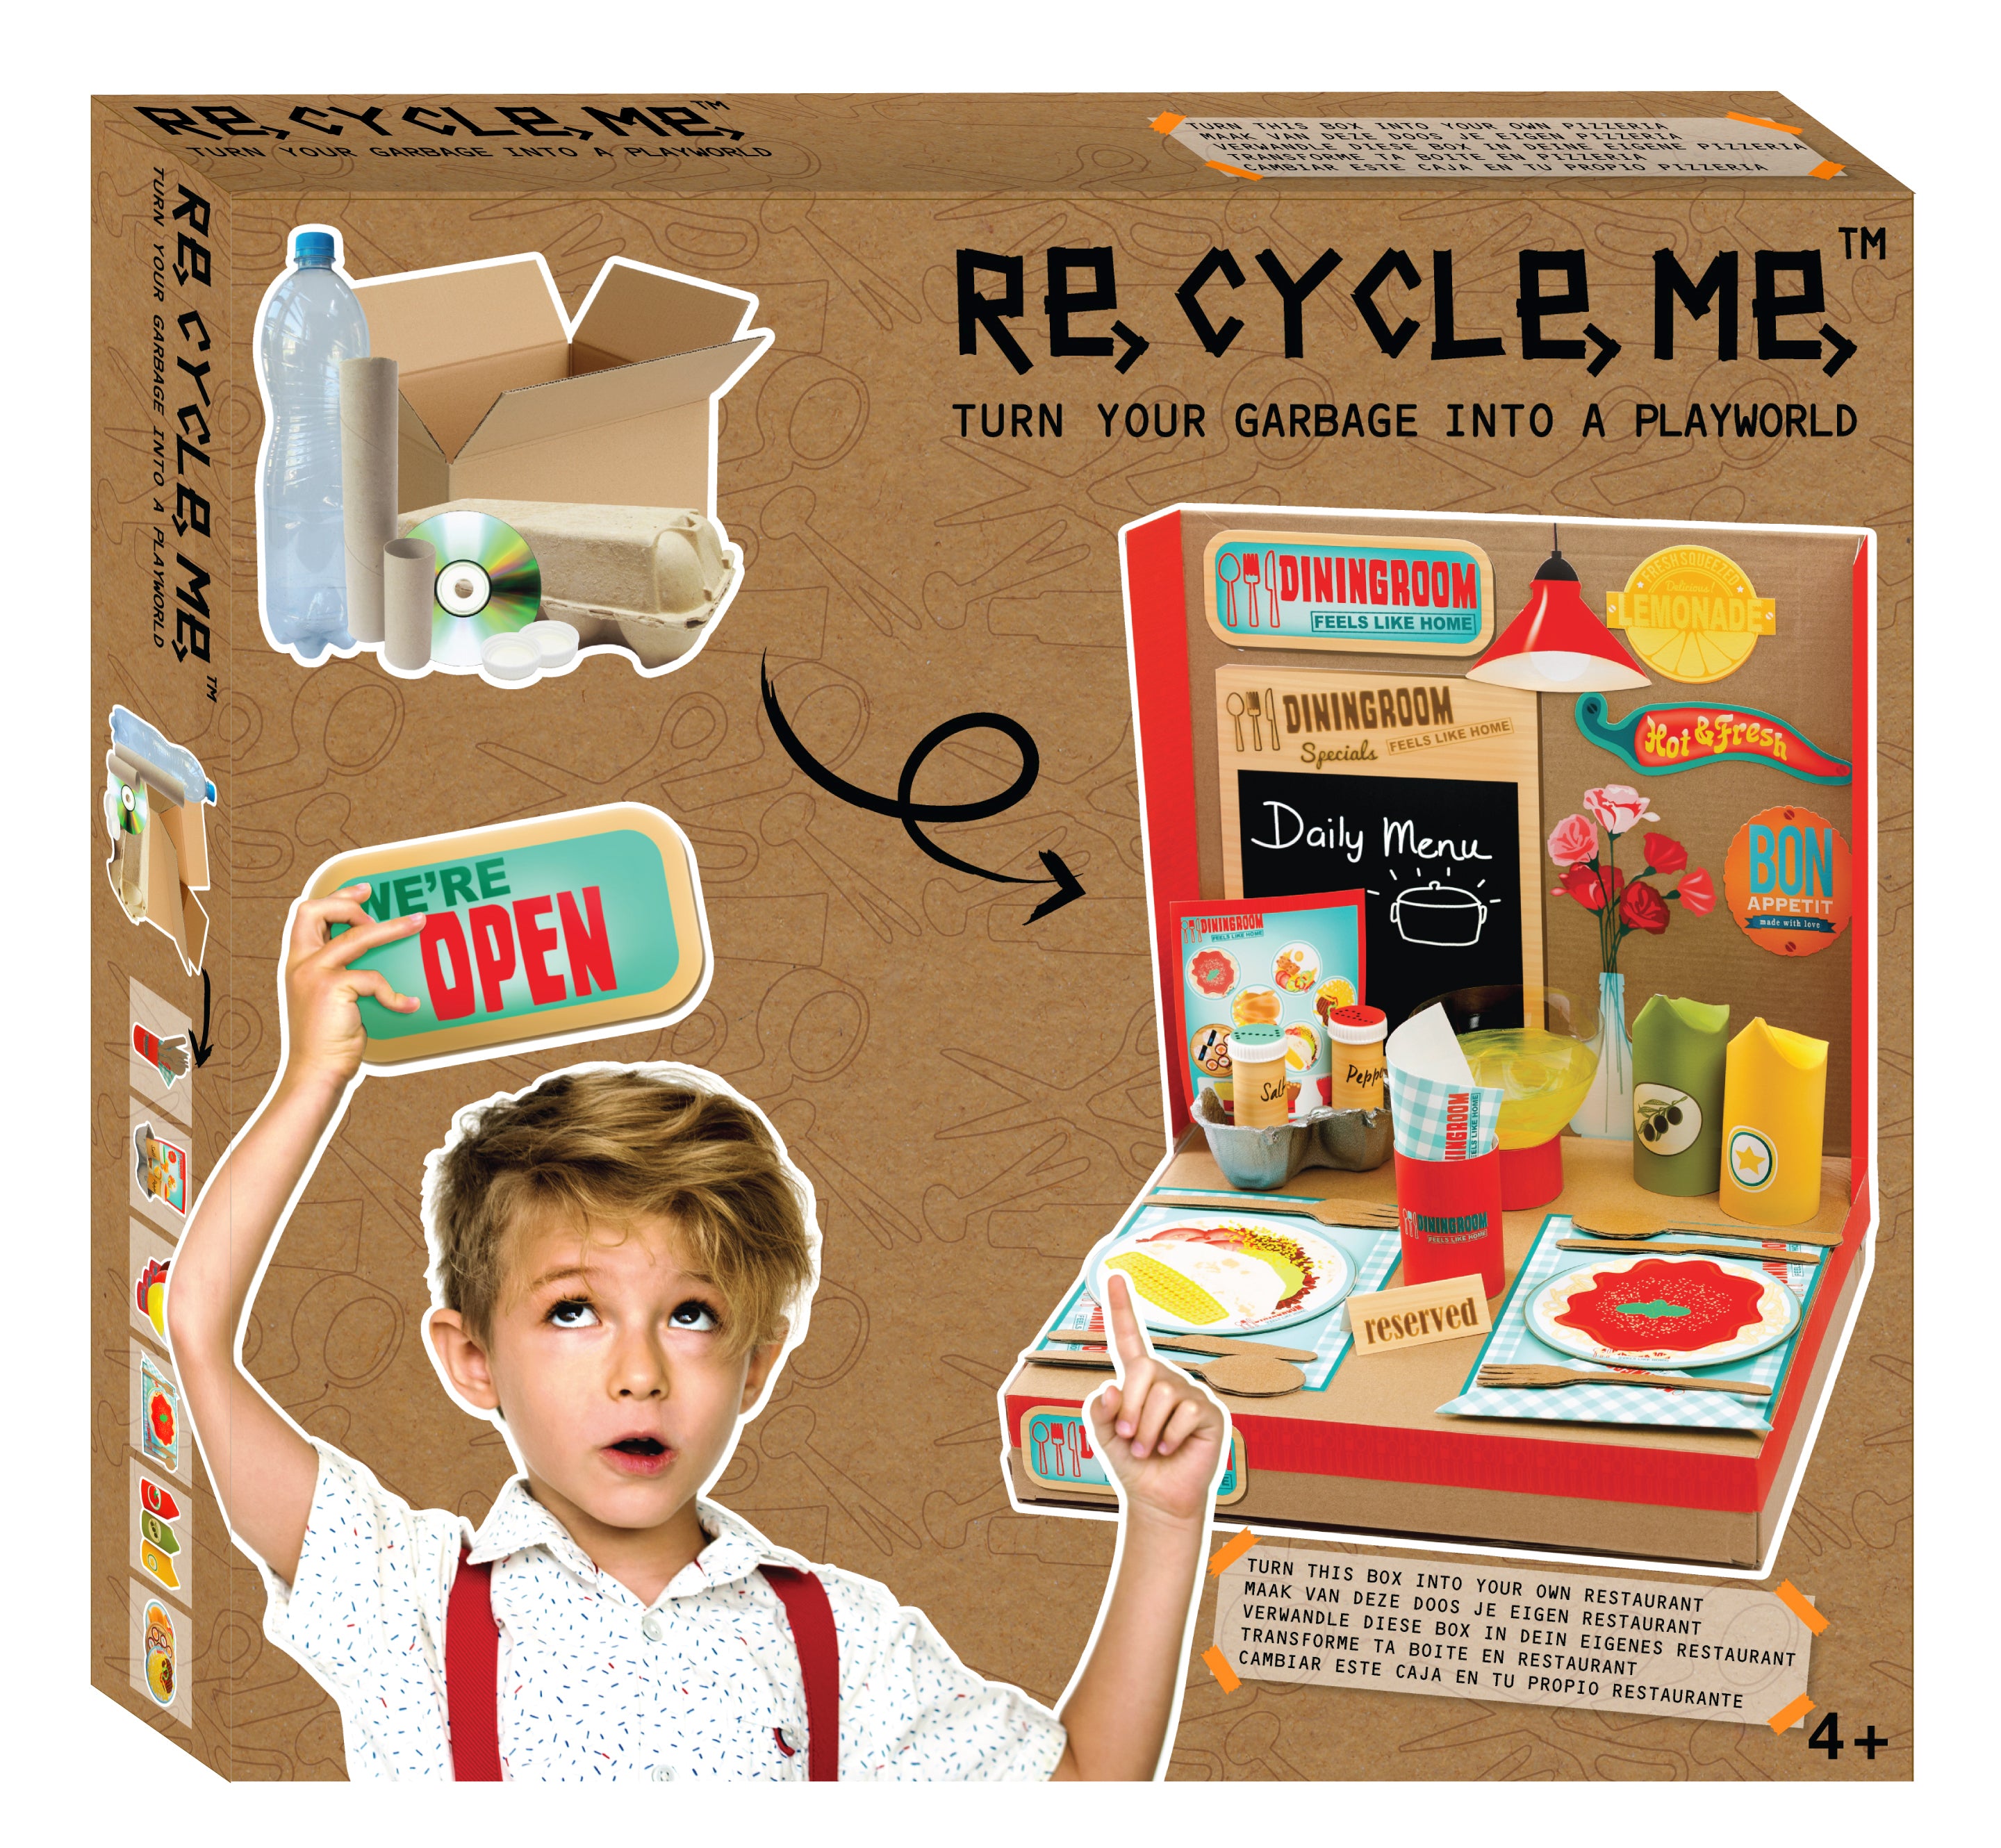 Re-cycle-me Playworld Restaurant